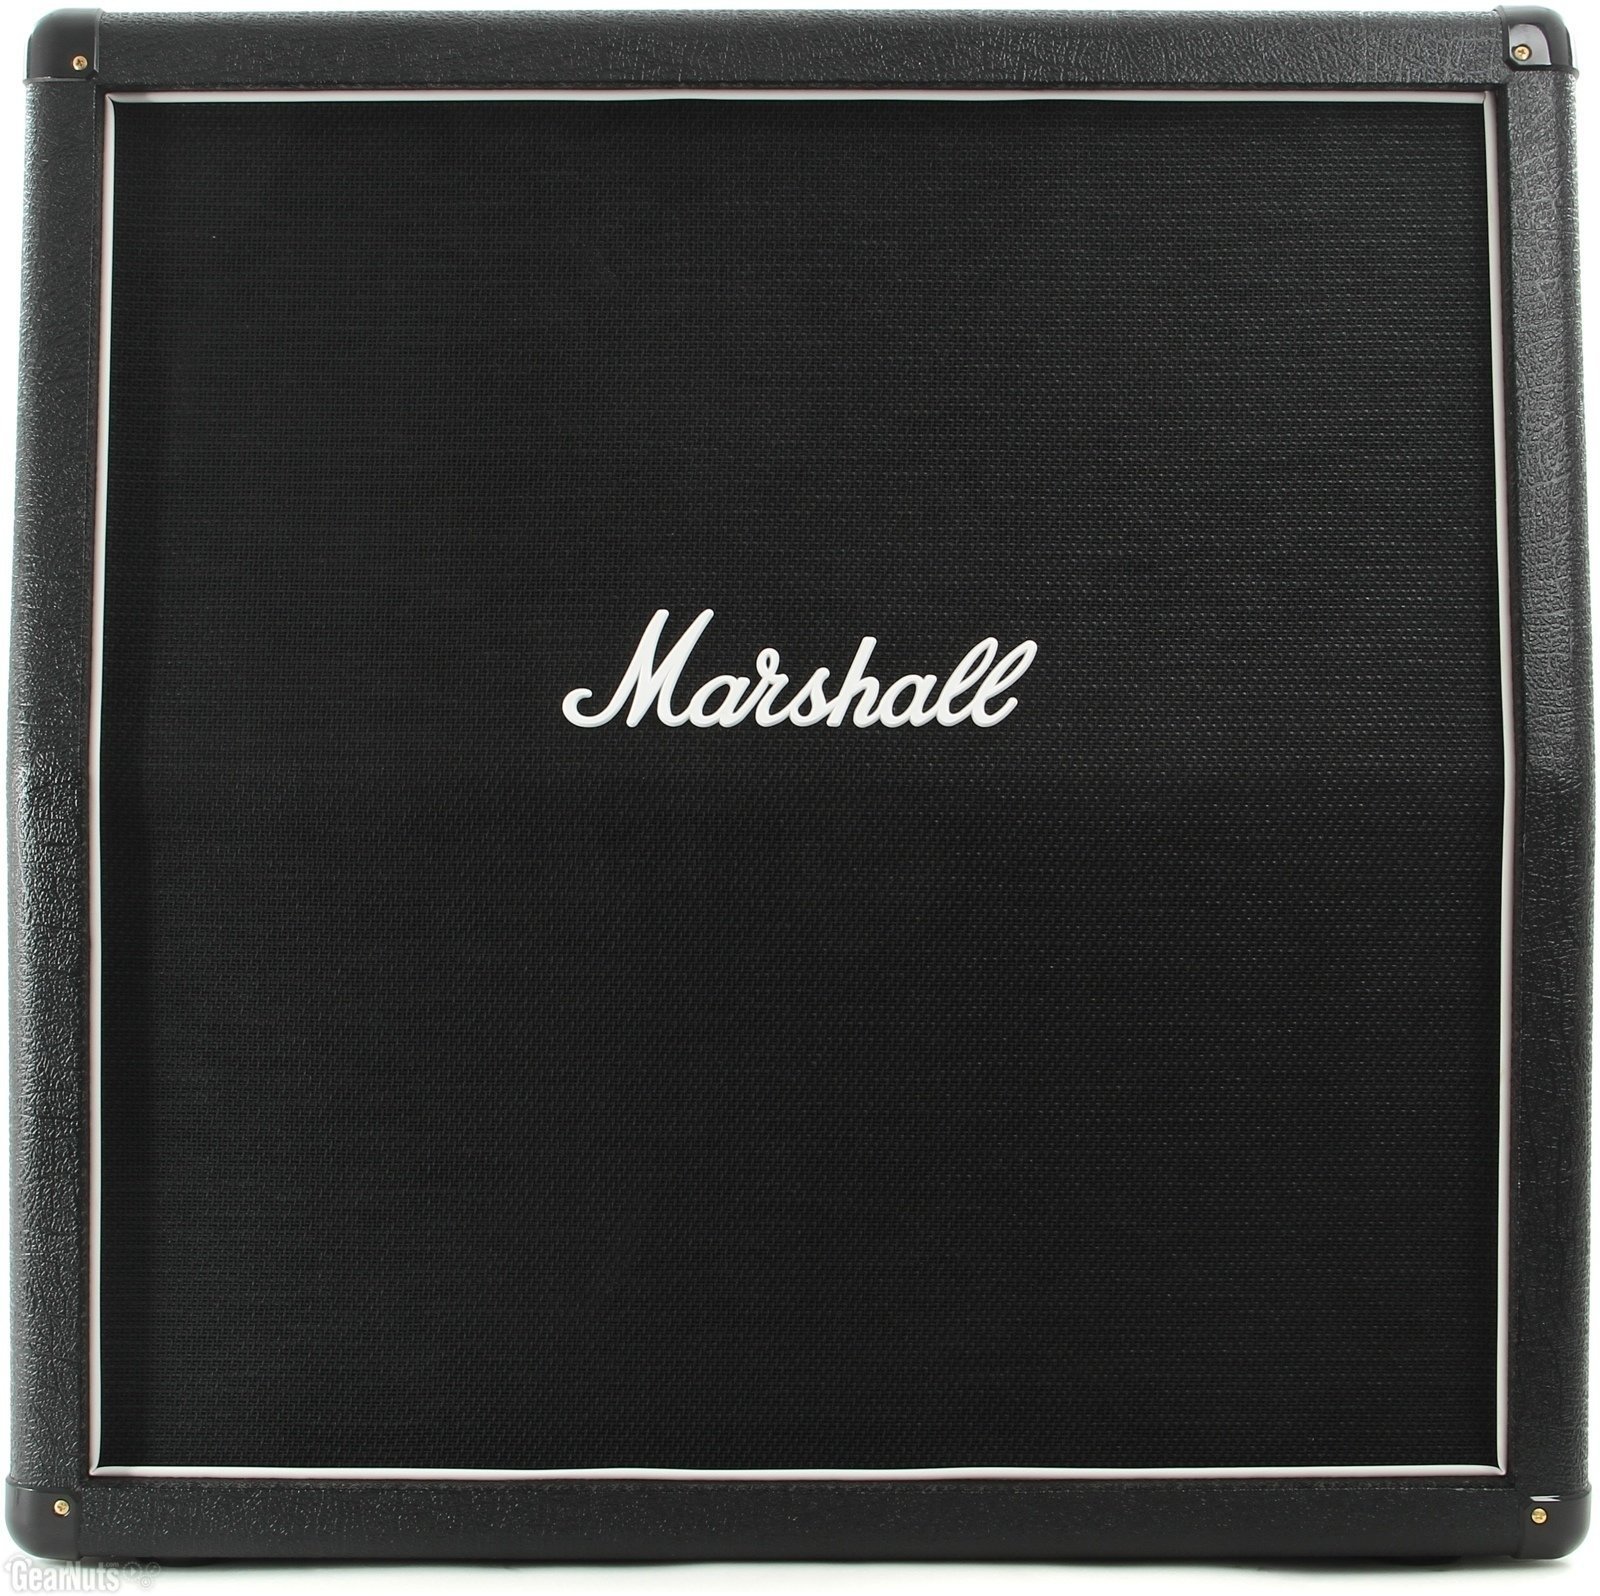 Gitarski zvičnik Marshall MX412A